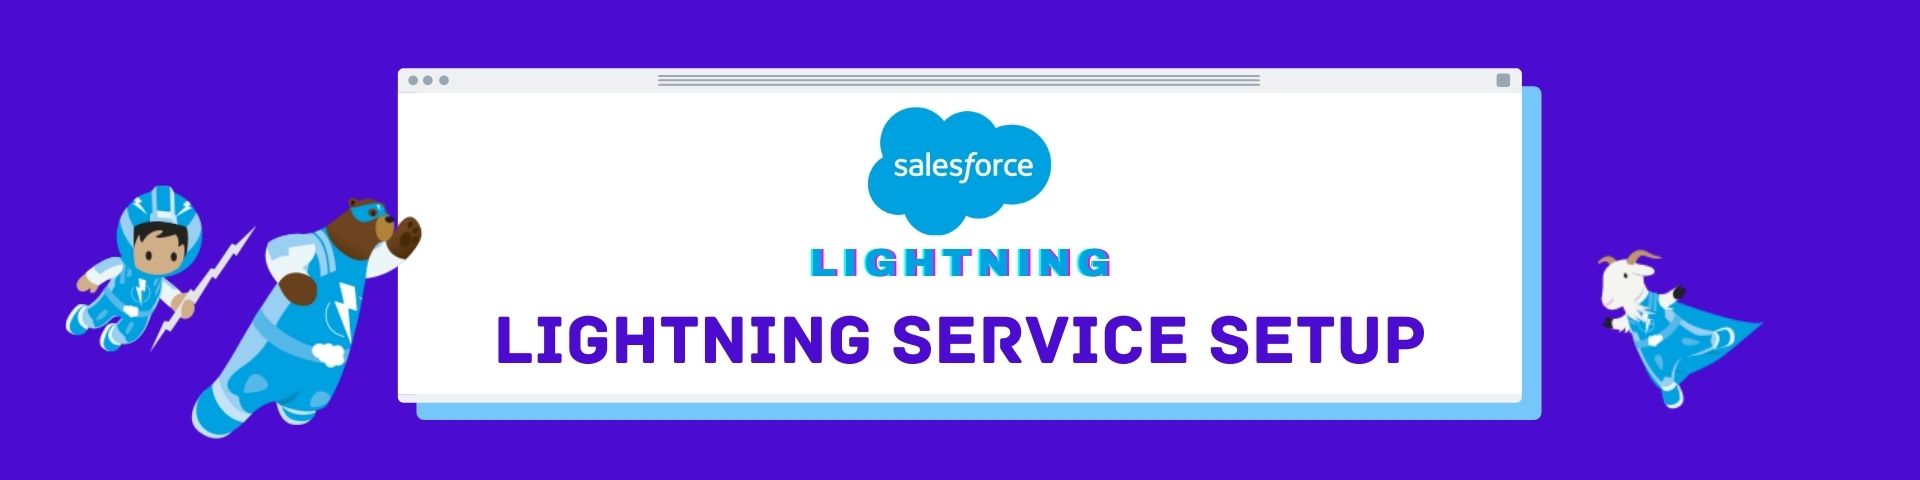 Salesforce Lightning Service setup